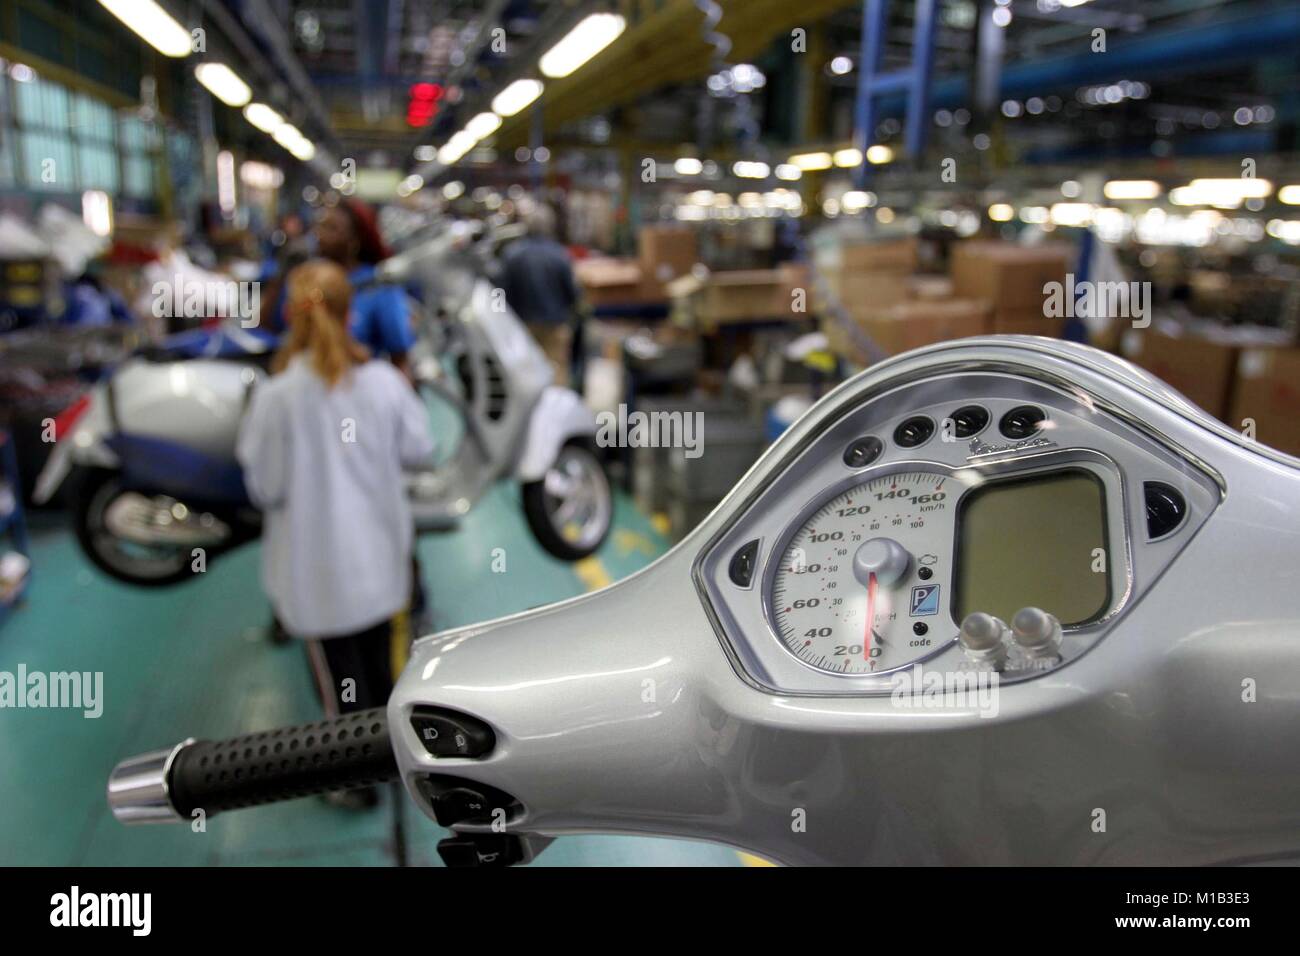 Piaggio Factory, production of motorcycles and scooters, Pontedera, Pisa, Italy    Credit © Riccardo Squillantini/Sintesi/Alamy Stock Photo Stock Photo